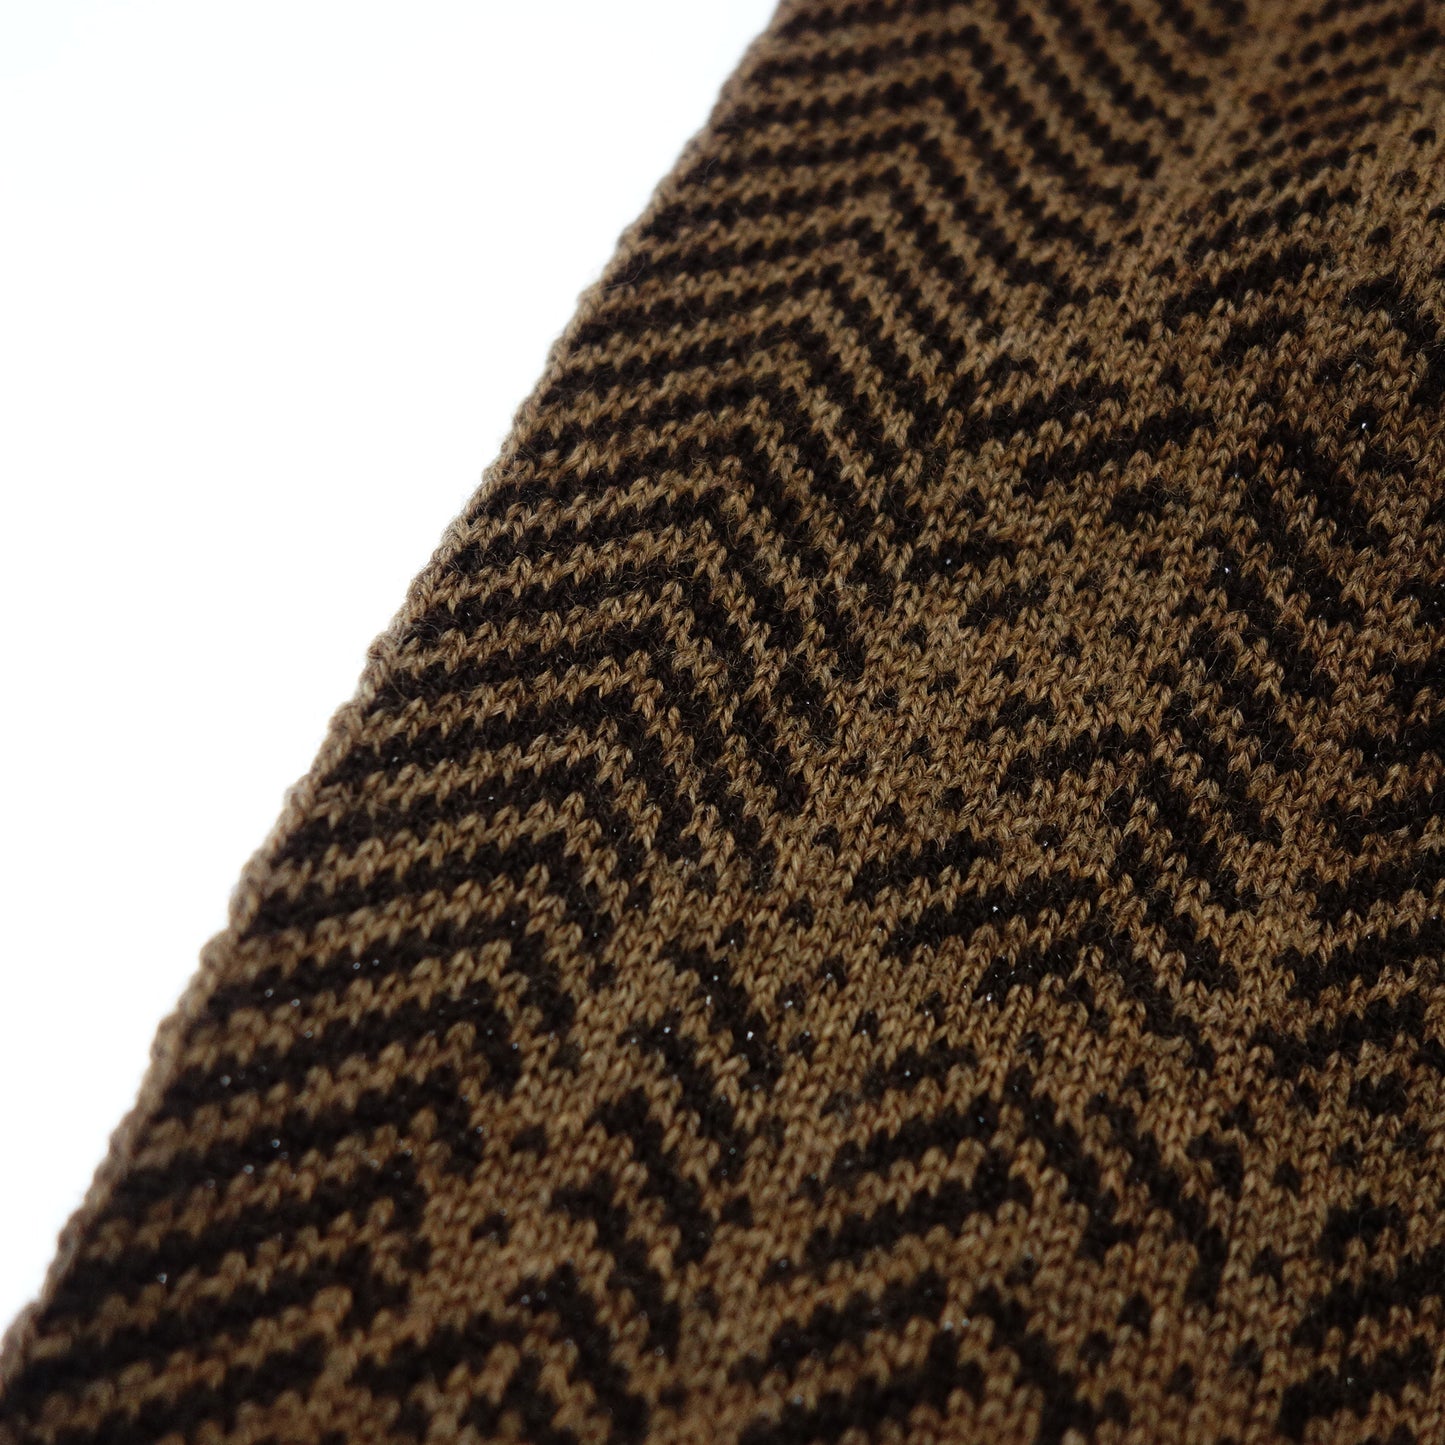 Fendi muffler 100% wool brown FENDI [AFI22] [Used] 